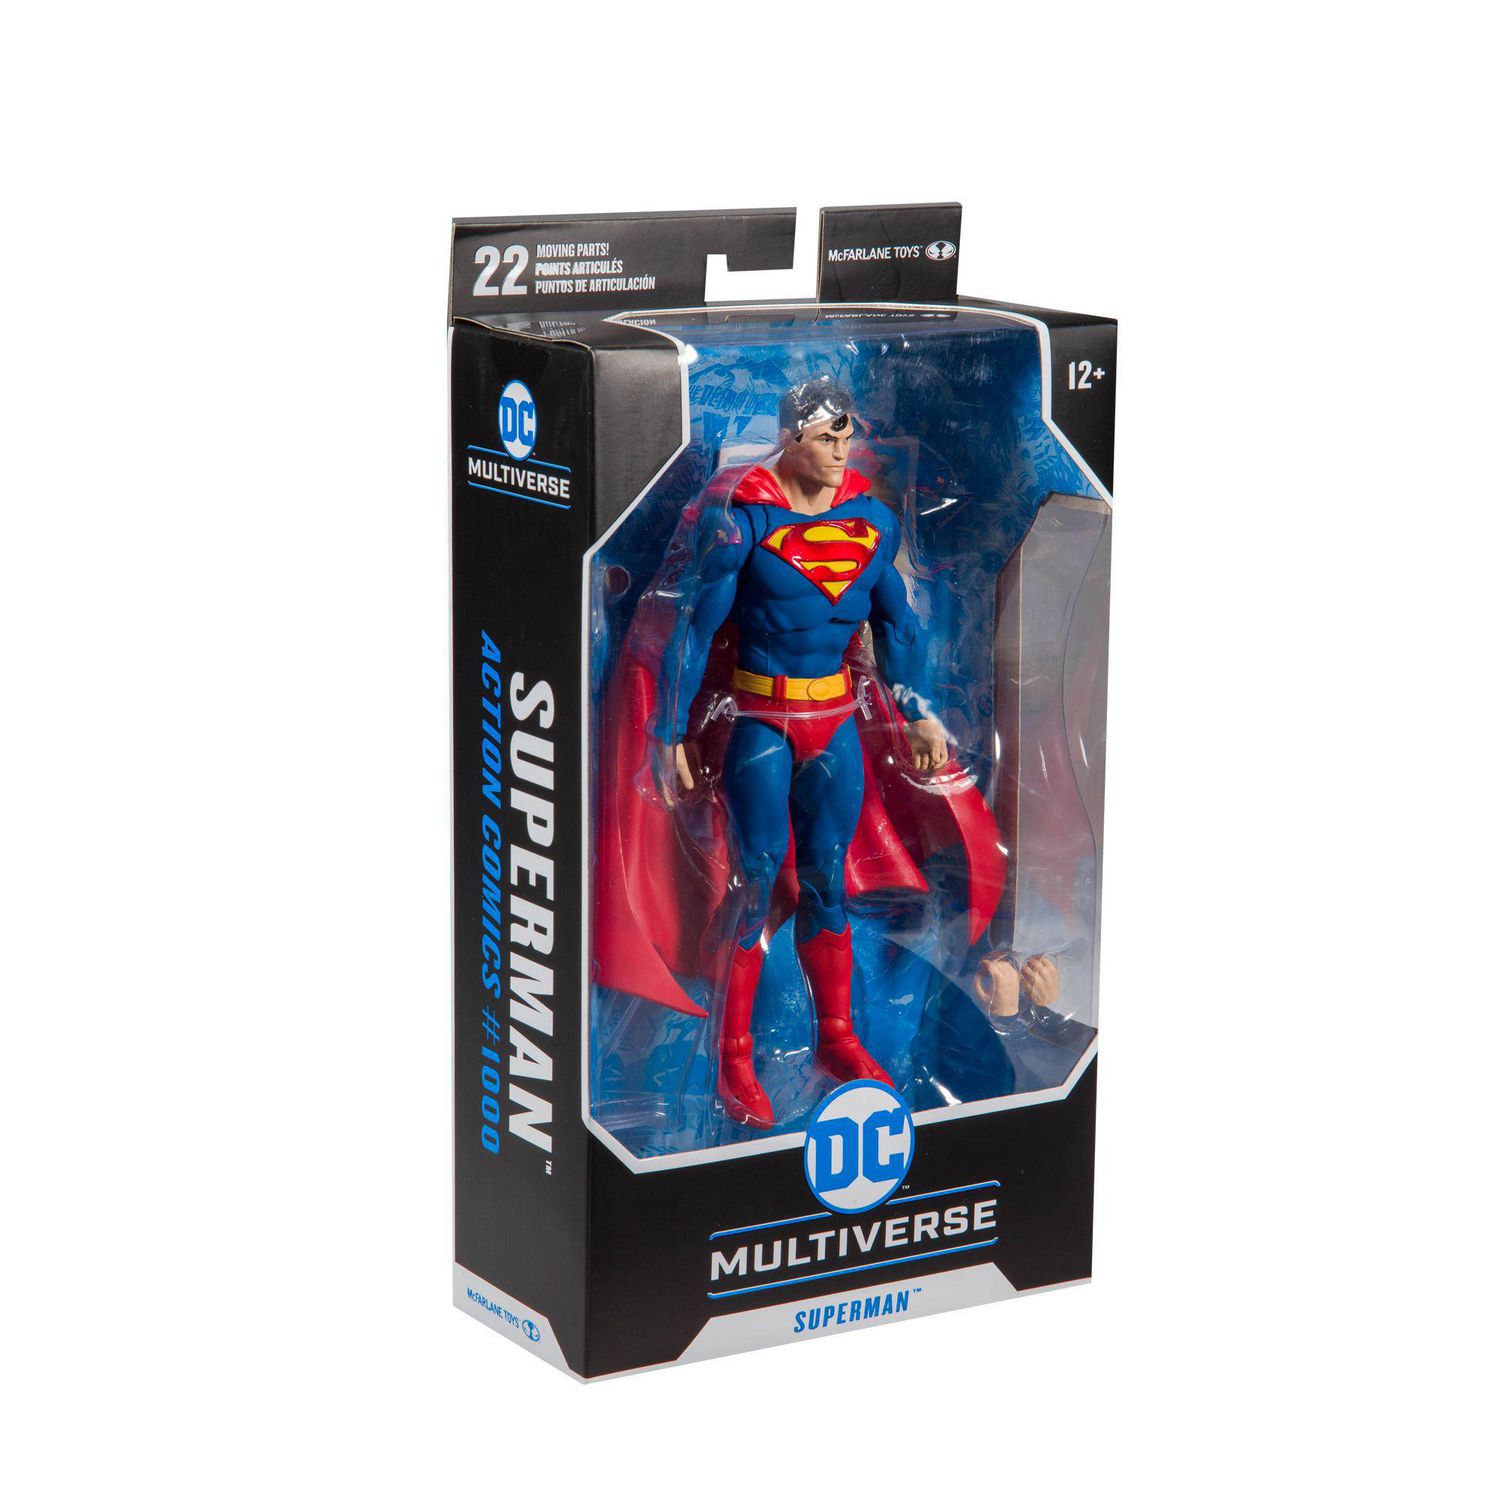 McFarlane DC Multi-univers Superman Action Comics #1000 ACTION FIGURE NEW IN BOX 